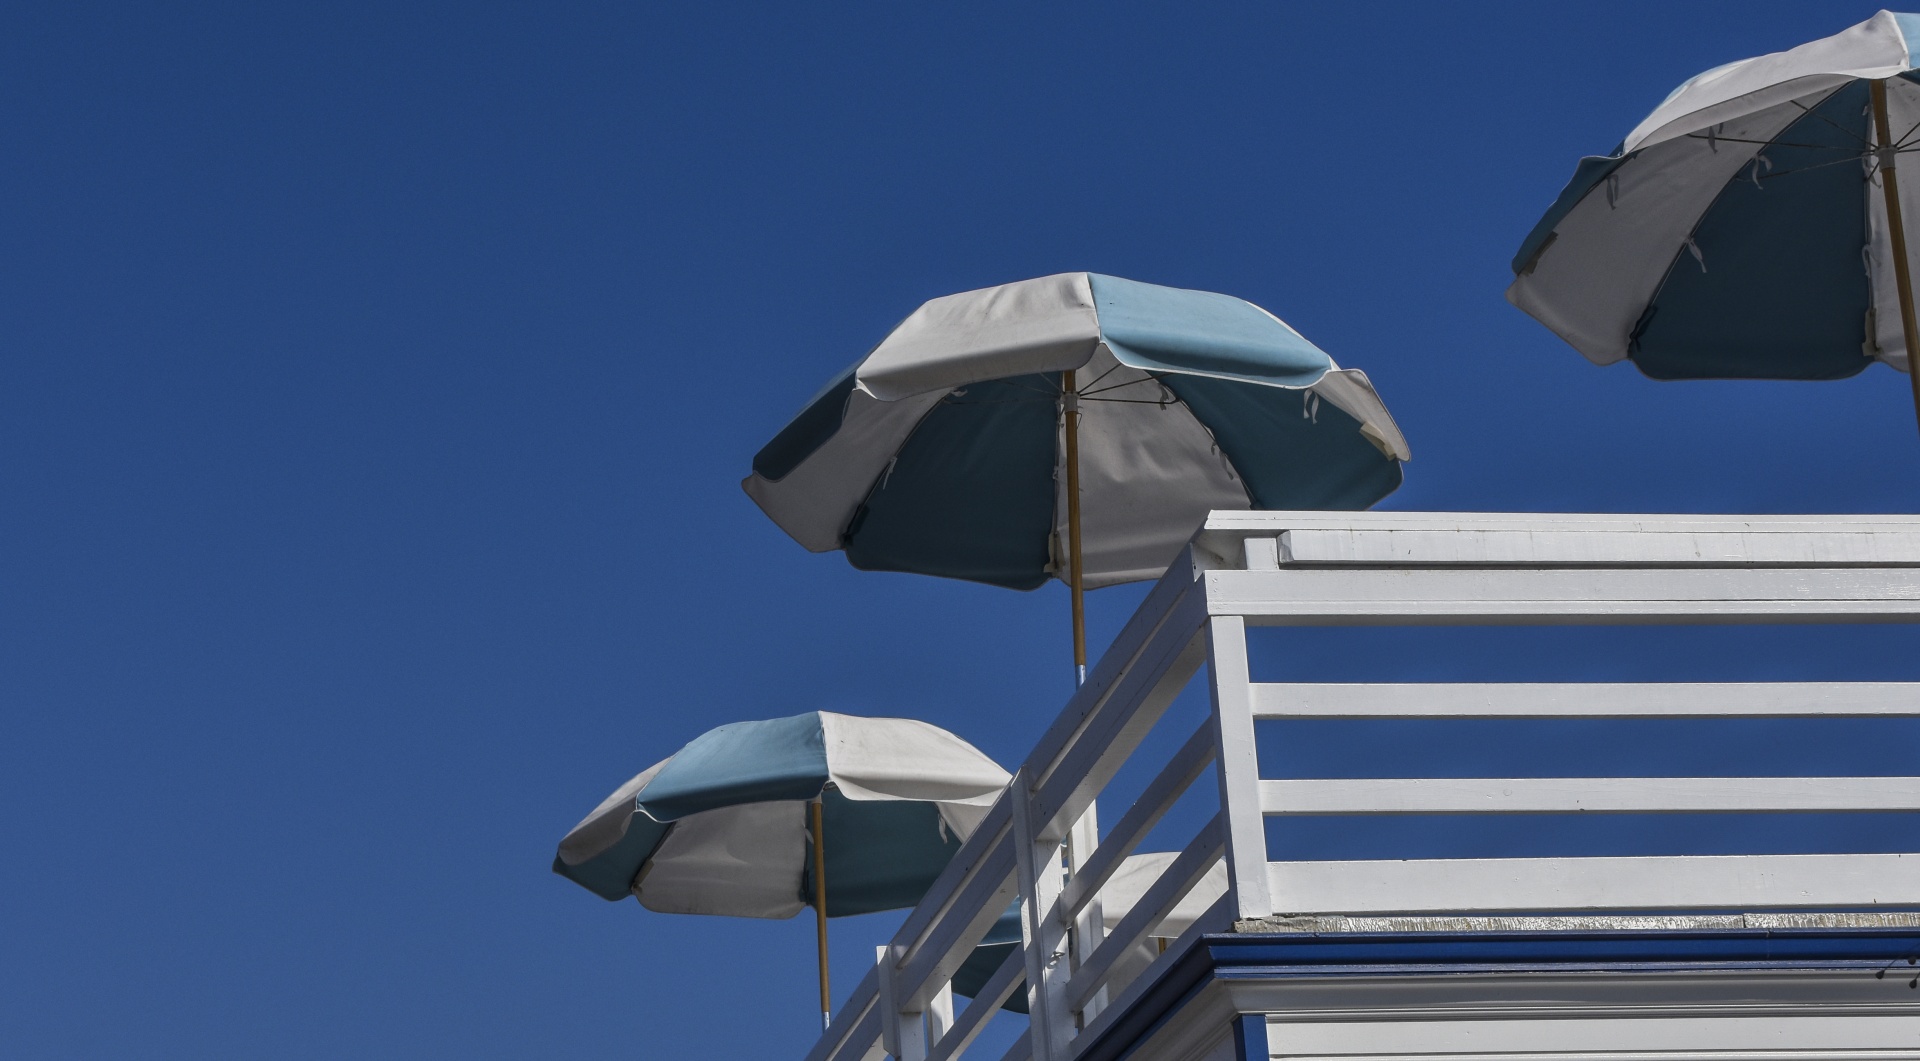 blue and white beach umbrellas on a pier